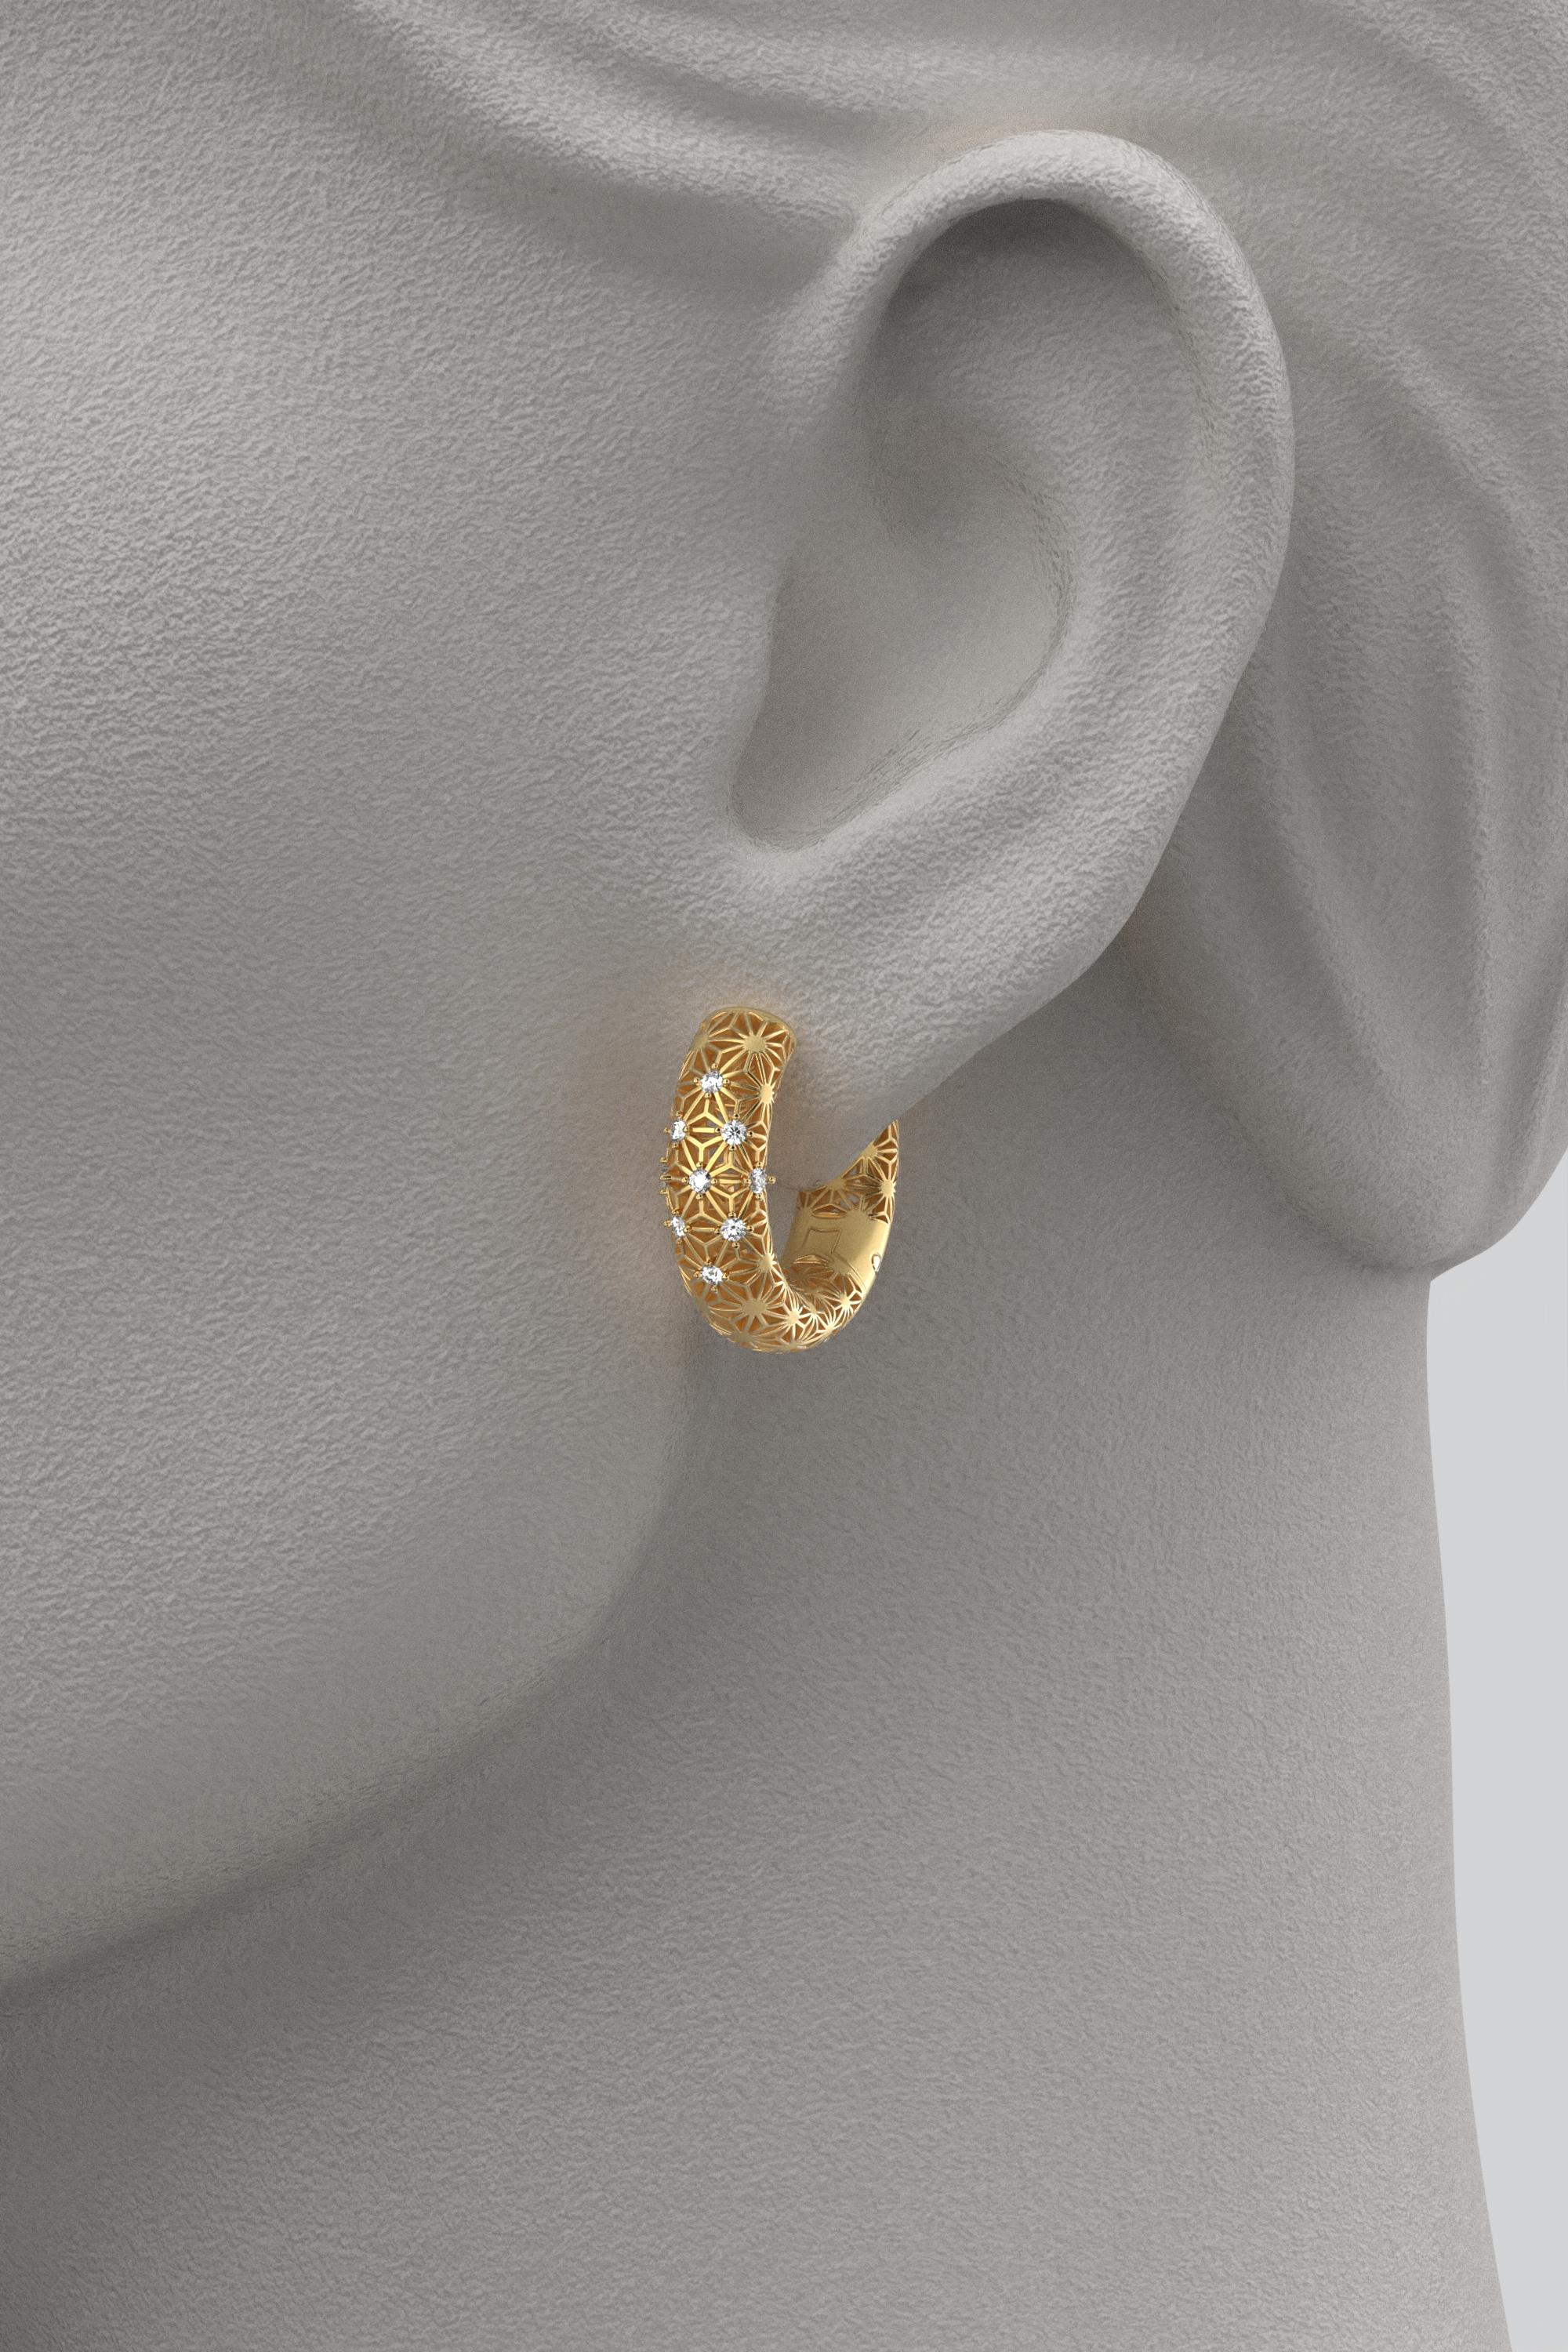 Brilliant Cut  14K Italian Gold Diamond Hoop Earrings - Sashiko Pattern - Oltremare Gioielli For Sale